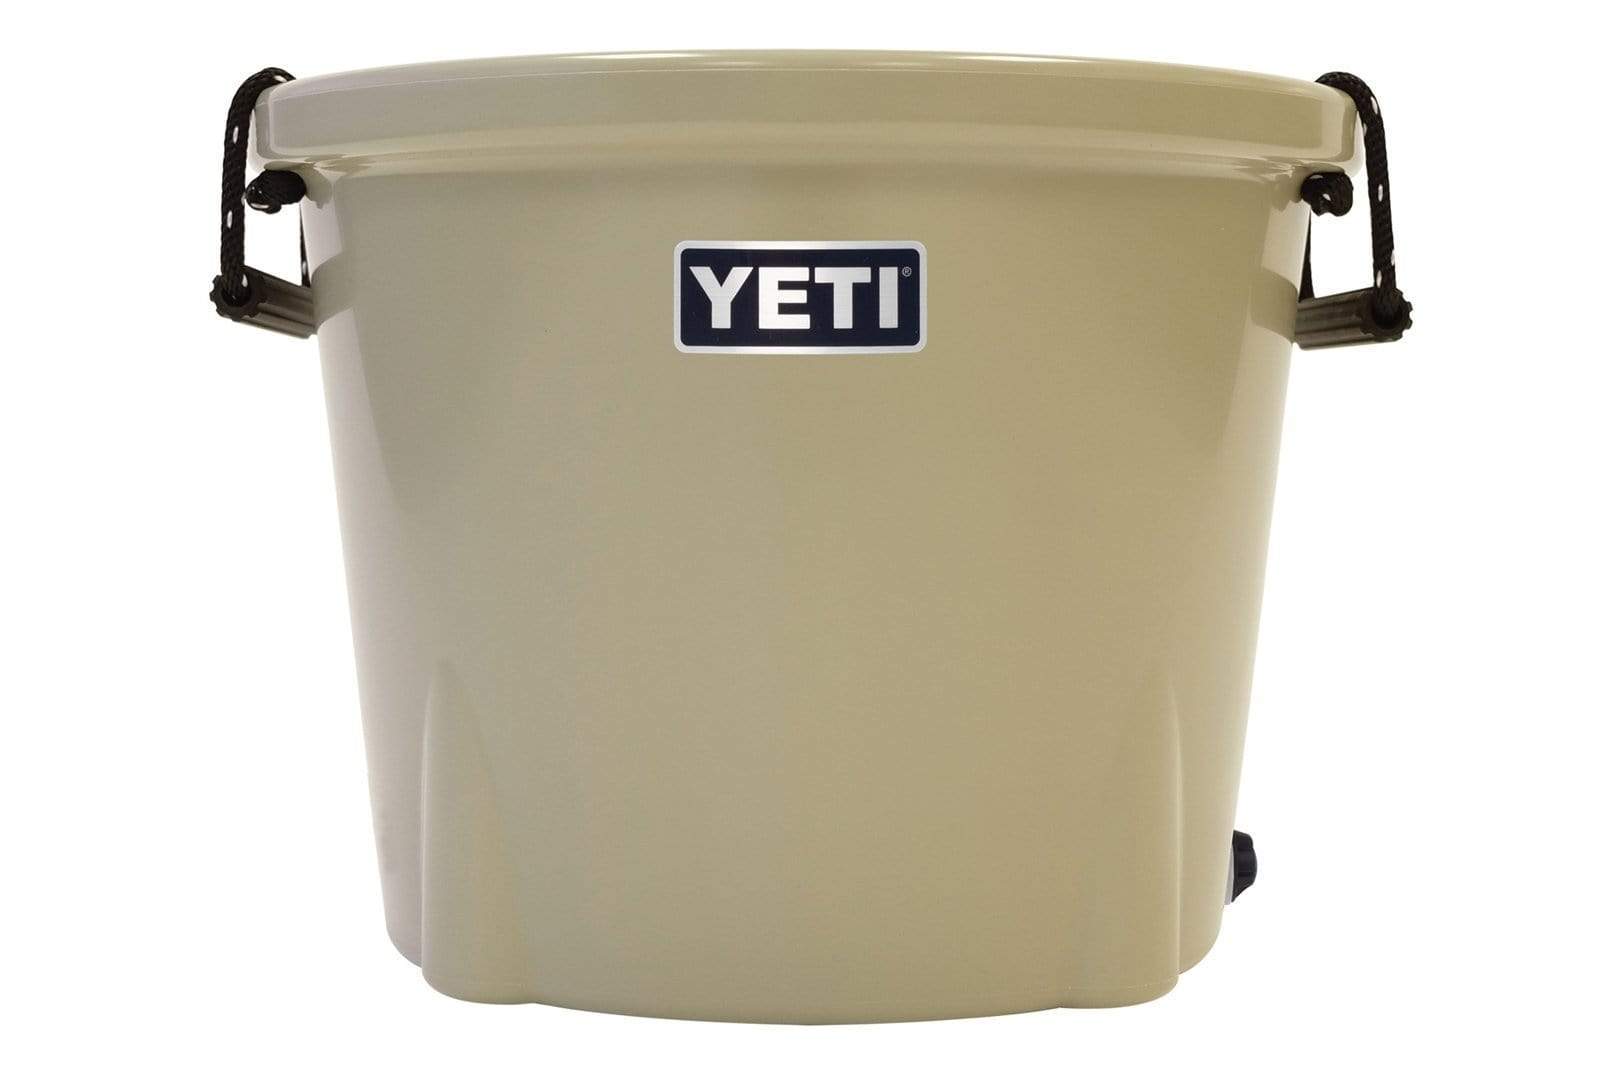 Kitchen & Company Cooler YETI Tank 45 Tan